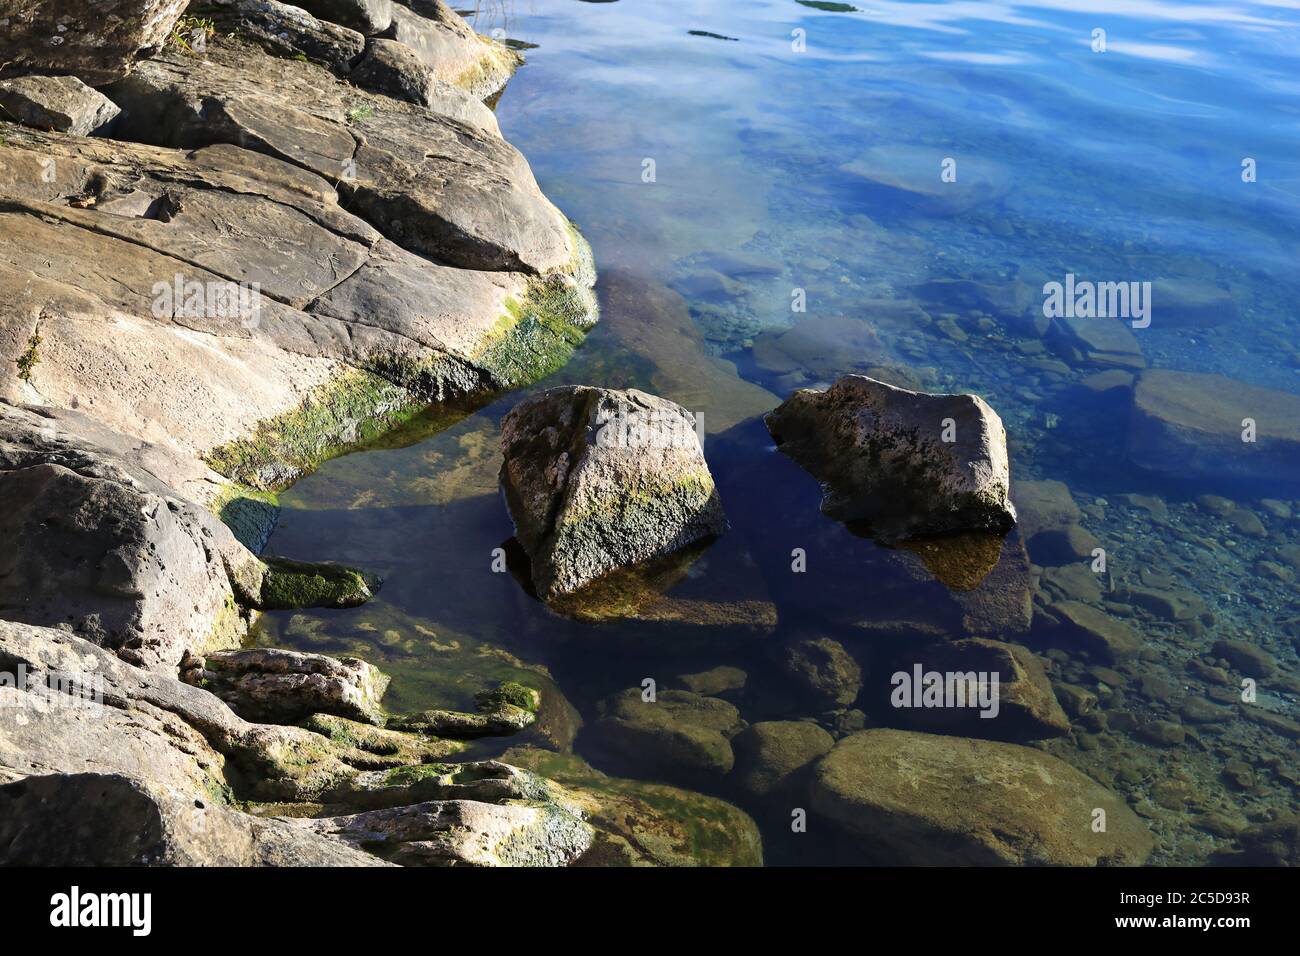 Lake Agerisee Zug Switzerland High Resolution Stock Photography and Images  - Alamy